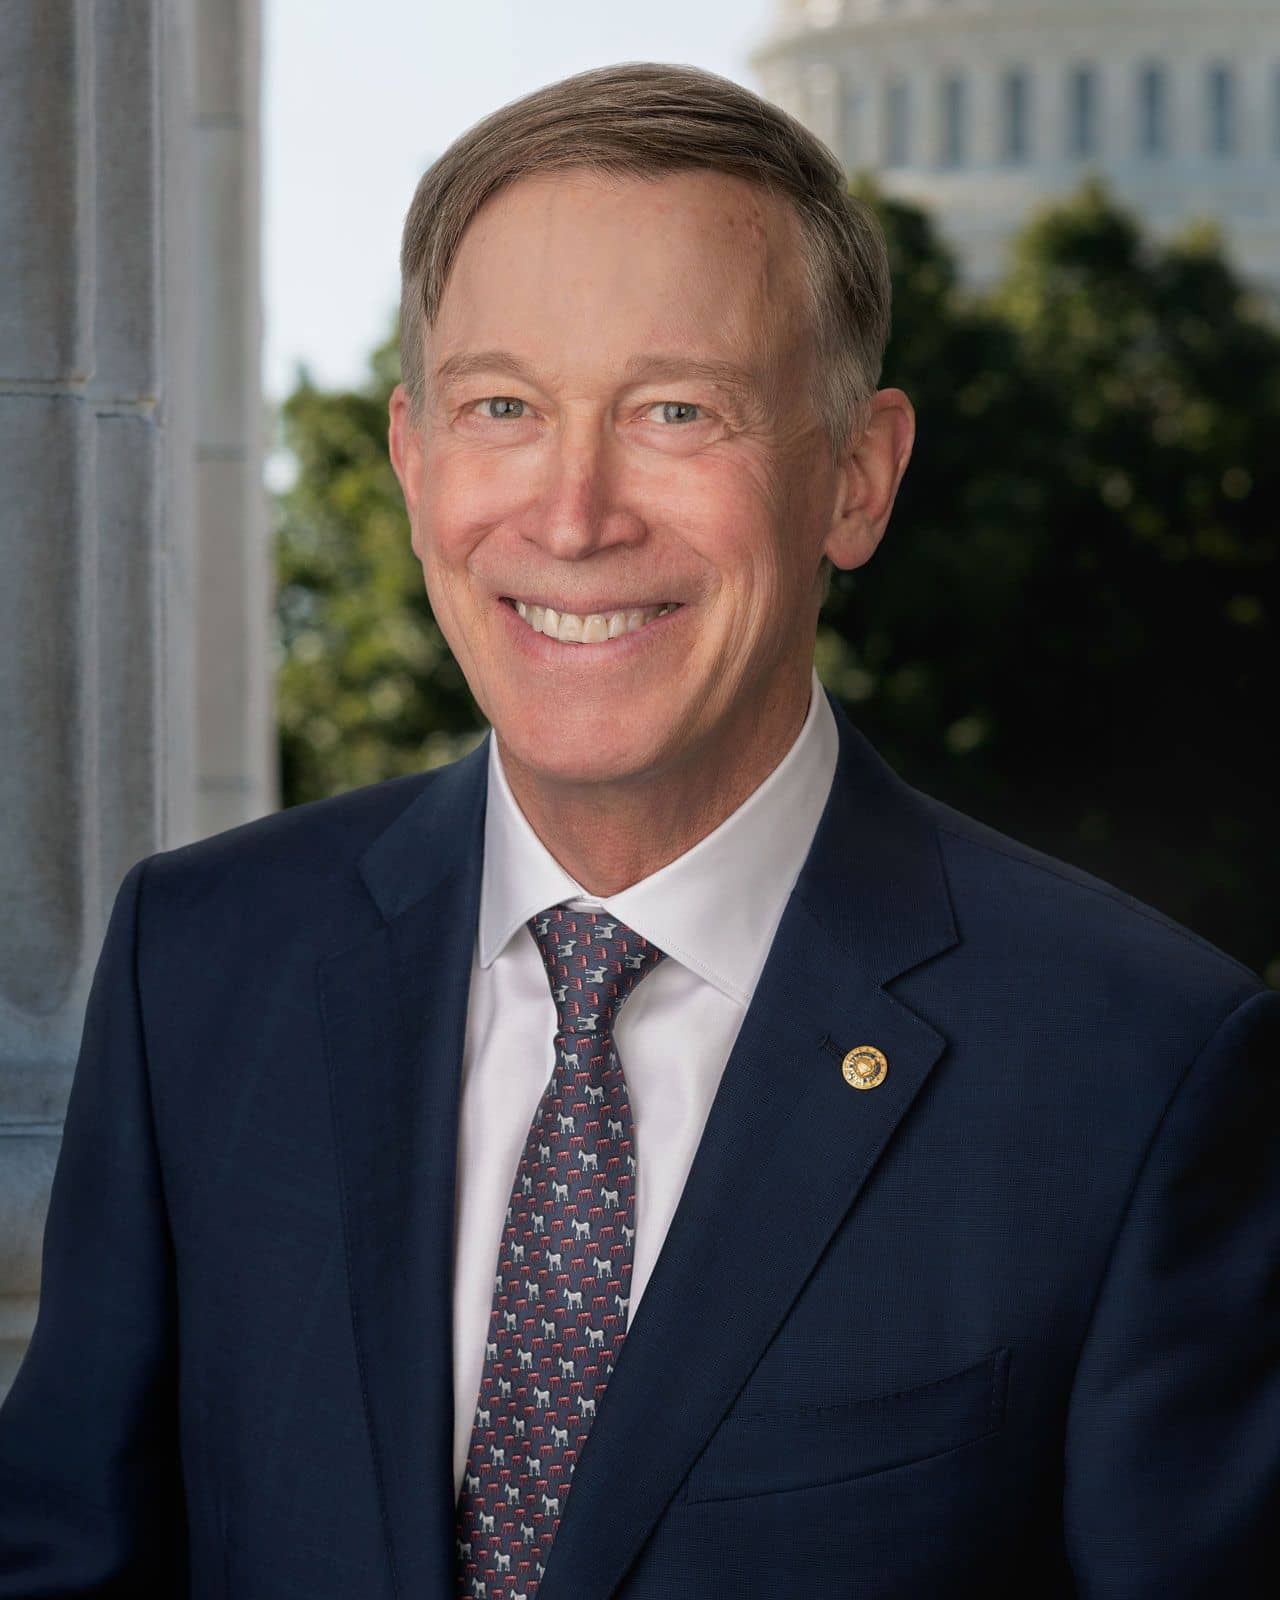 Image of John W. Hickenlooper, U.S. Senate, Democratic Party